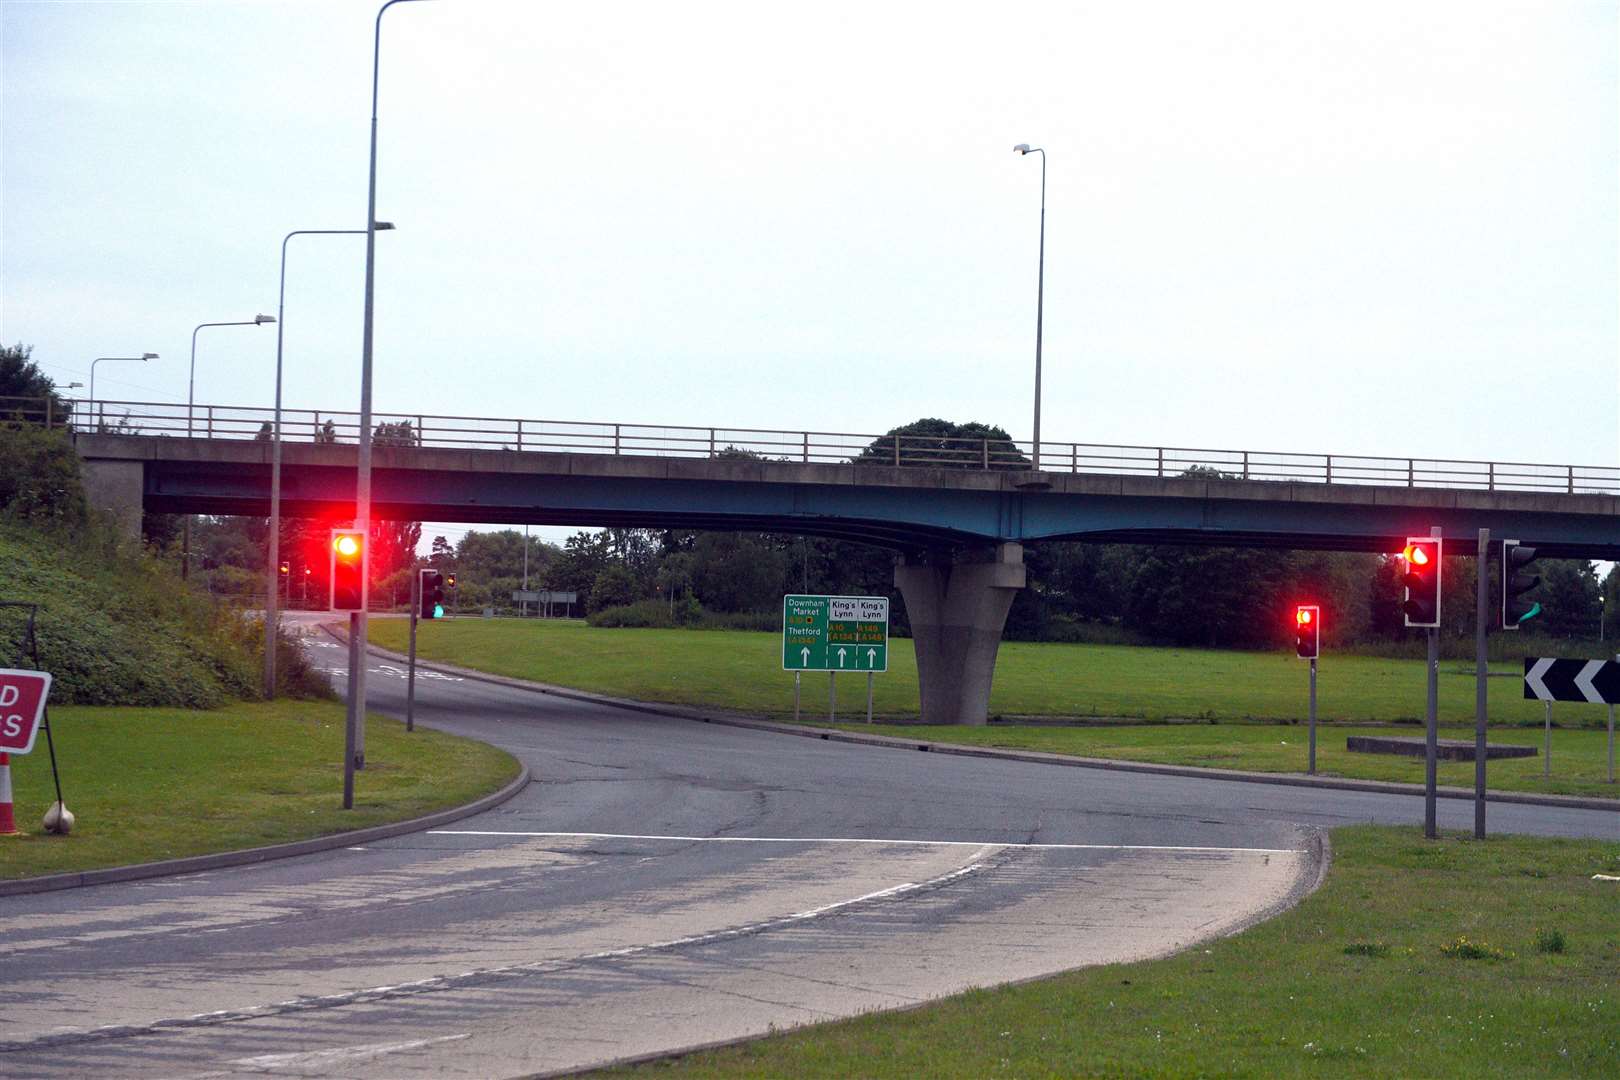 The Hardwick roundabout in Lynn, where Jordan Hardman was caught drink-driving